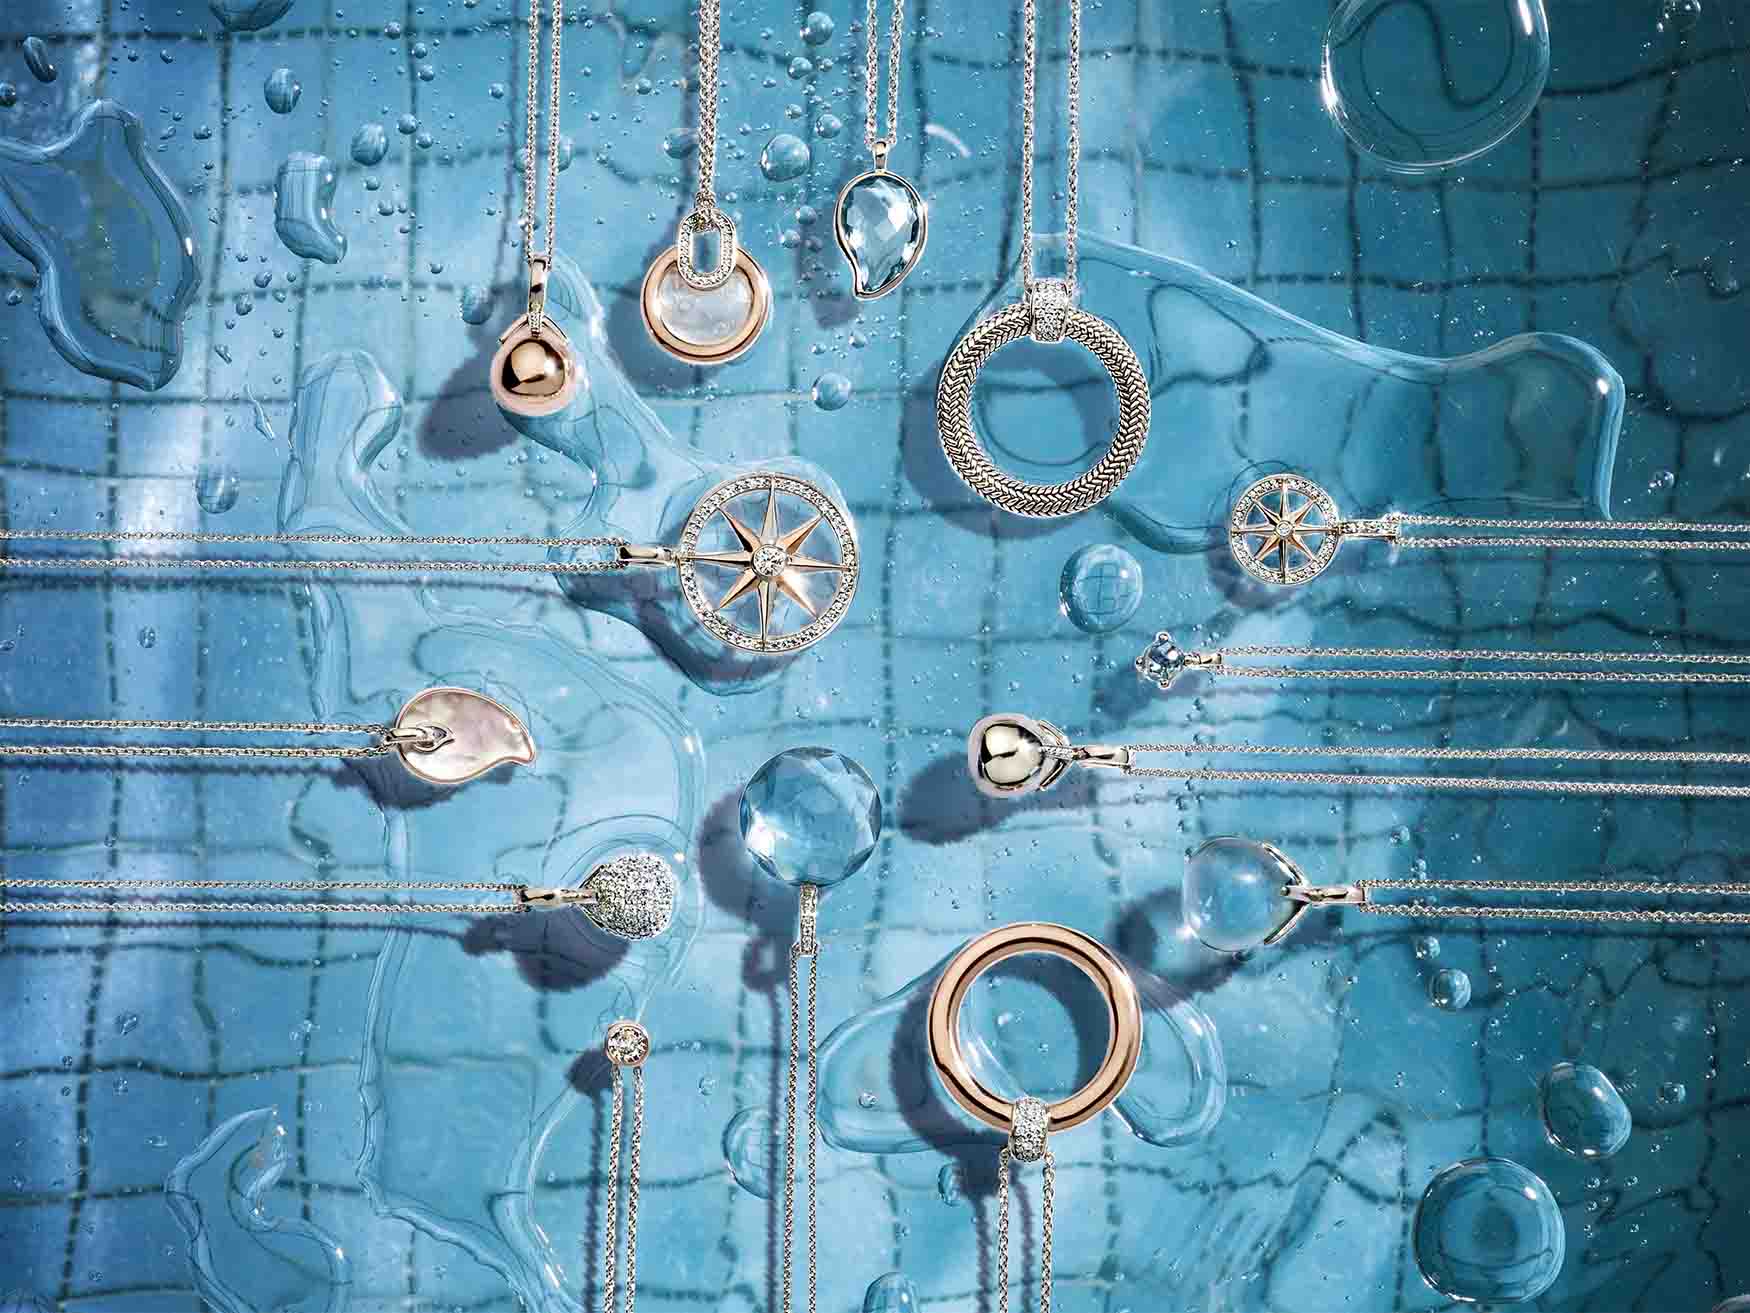 silver jewelry in pool water